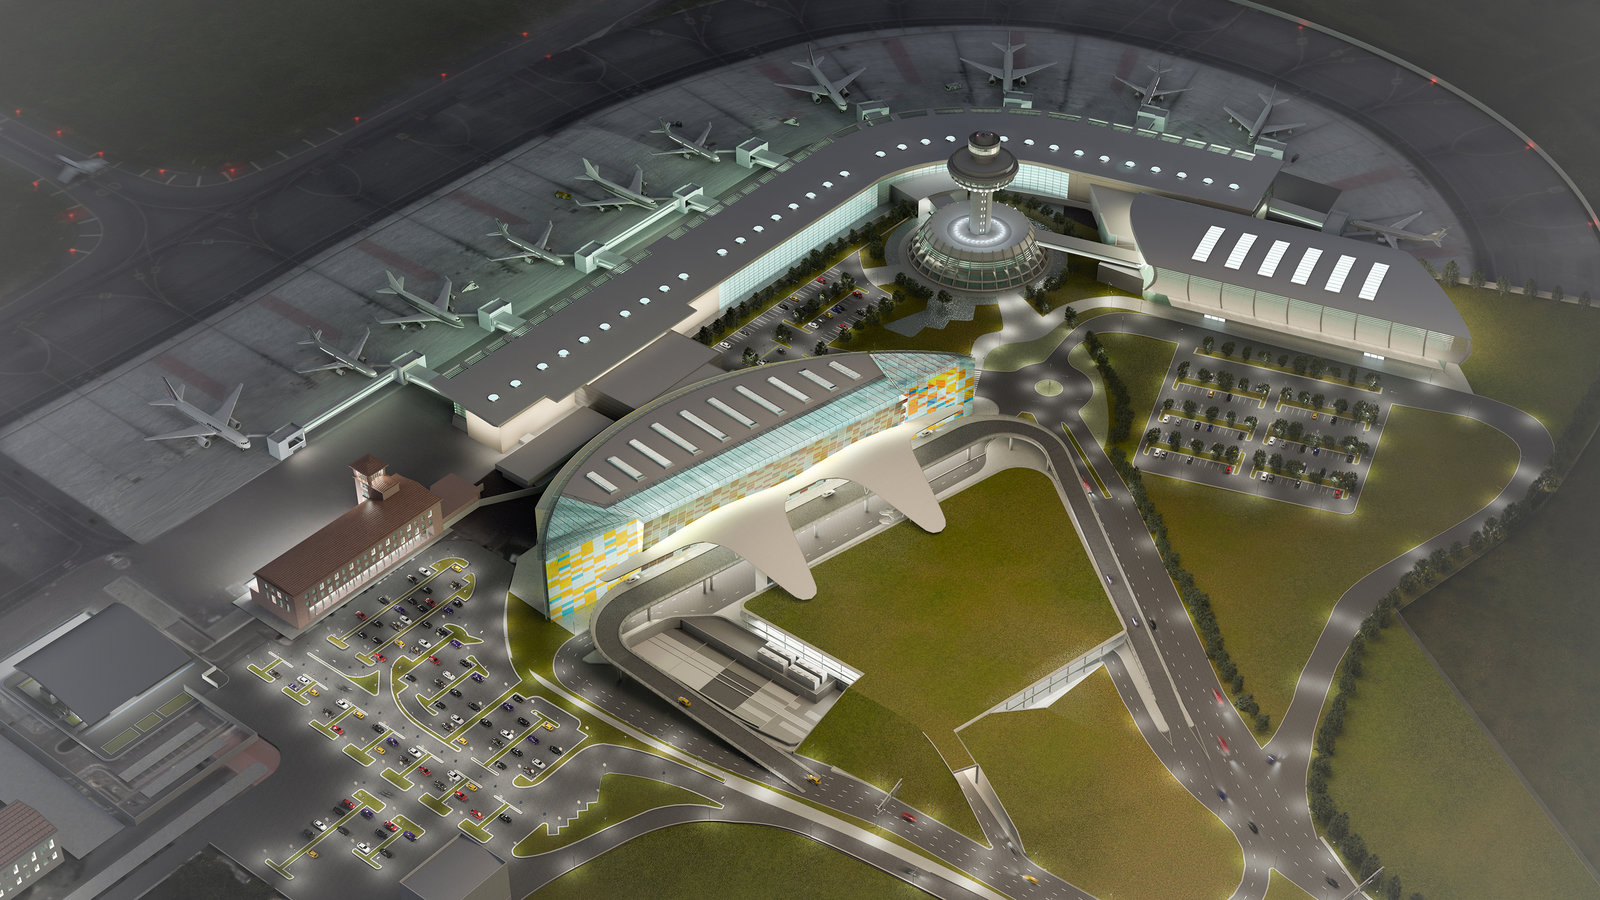 Сайт аэропорта звартноц. Международный аэропорт Ереван Звартноц. Аэропорт Еревана Звартноц новый терминал. Аэропорт Звартноц в Ереване план. Аэропорт в Ереване Звартноц 2021.